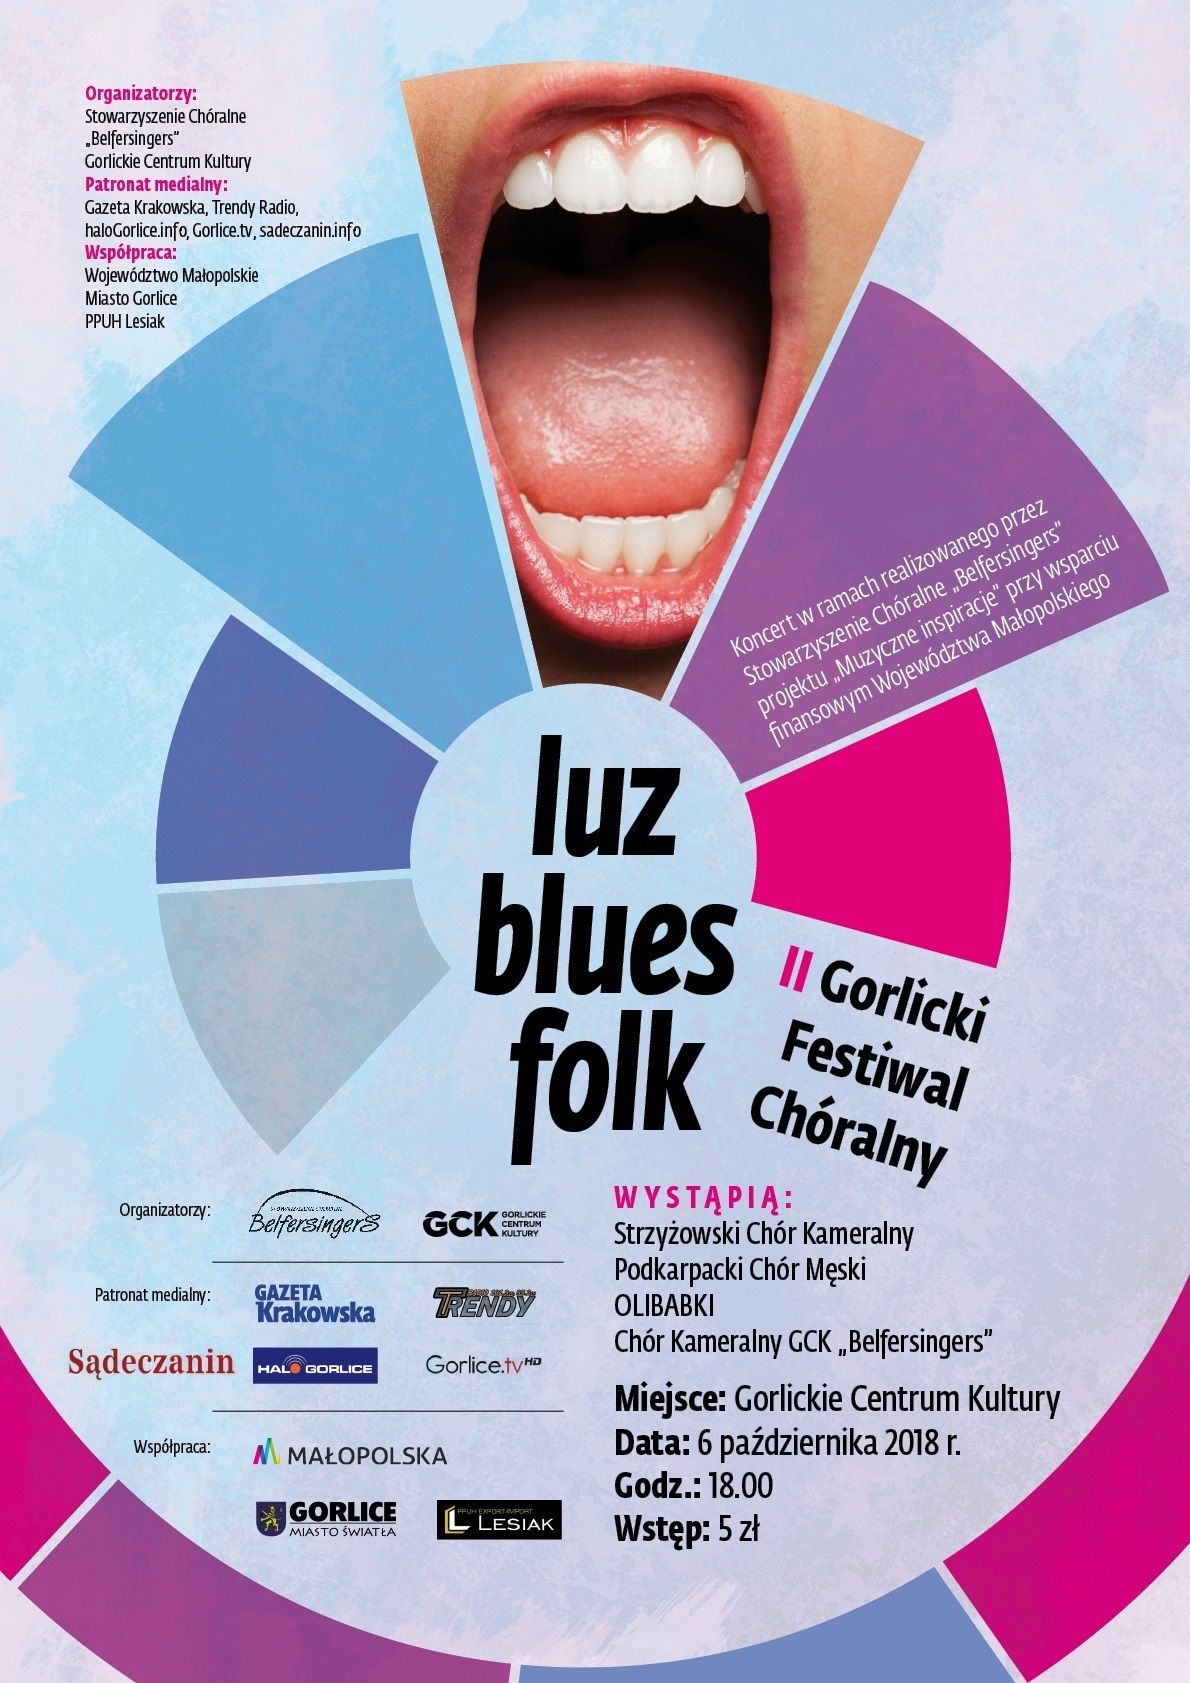 II Gorlicki Festiwal Chóralny „Luz blues folk”